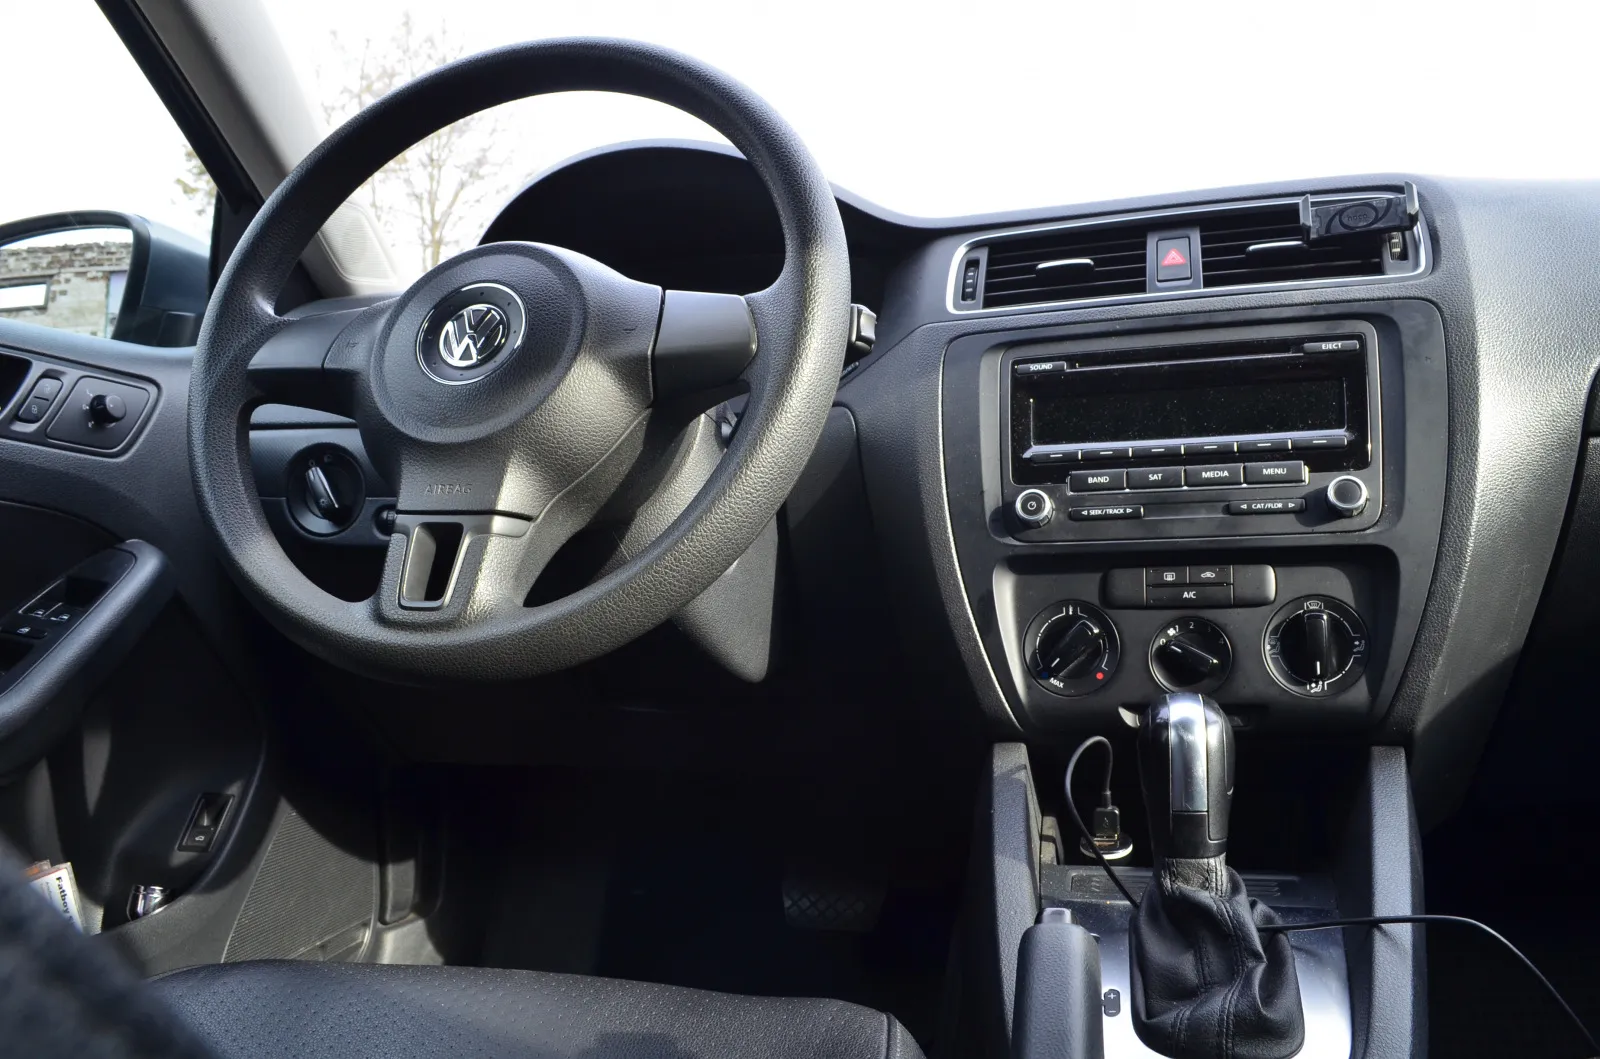 Volkswagen Jetta 2013 купити авто в лізинг